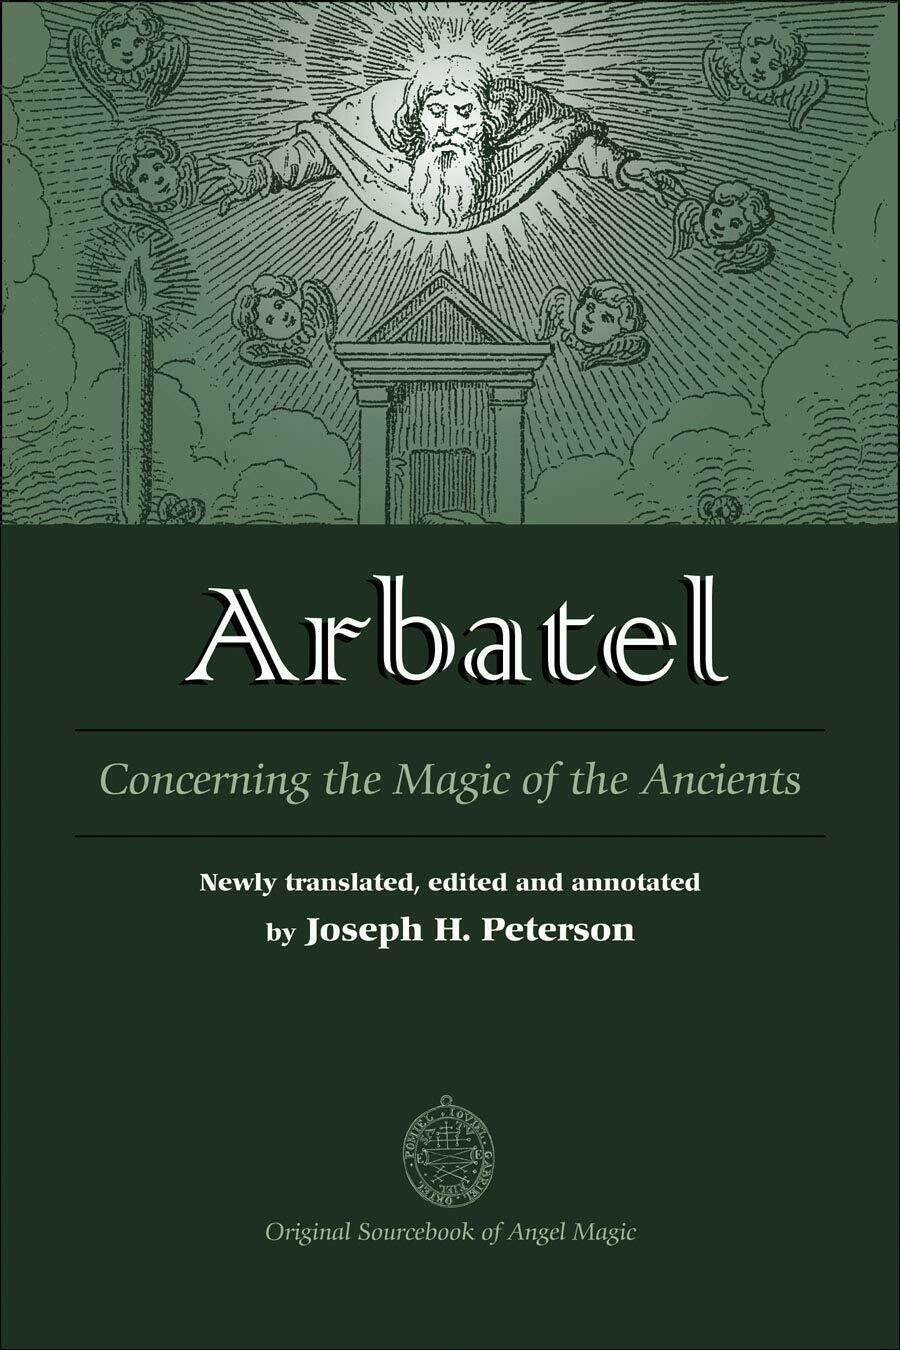 Arbatel by Joseph Peterson